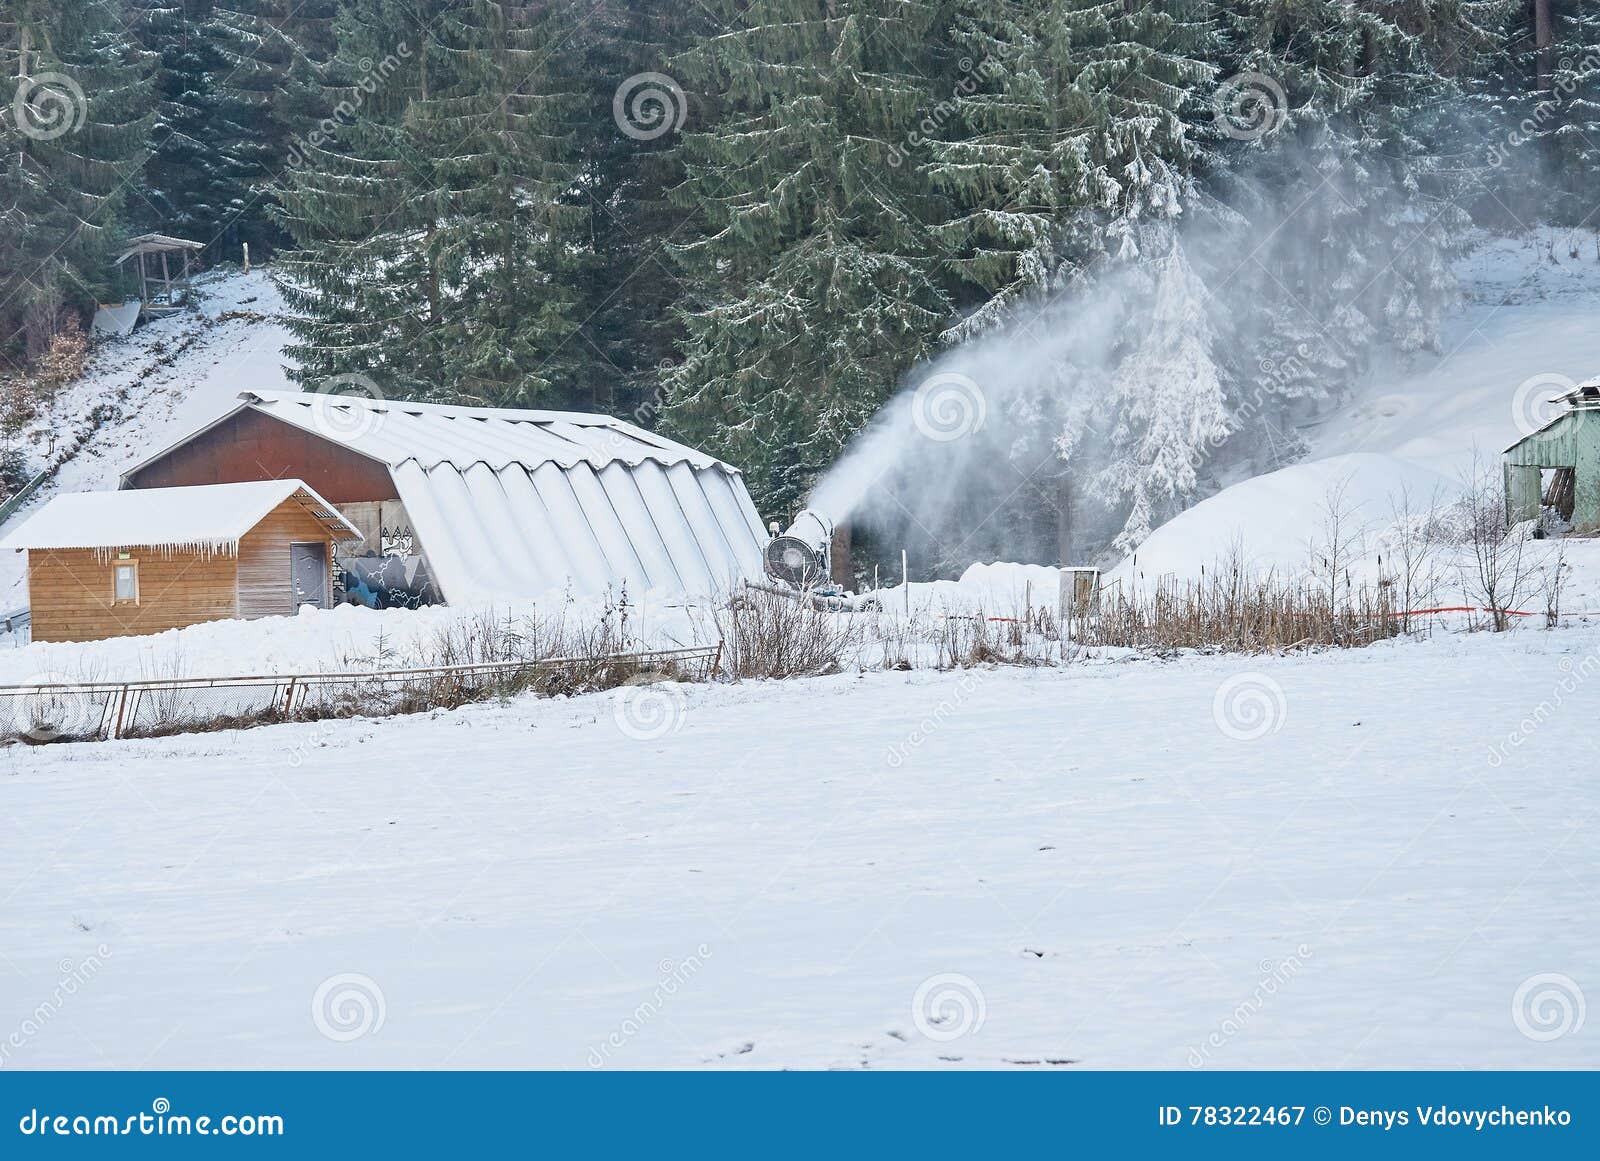 https://thumbs.dreamstime.com/z/snow-making-machine-make-snow-ski-resort-beautiful-forest-behind-78322467.jpg